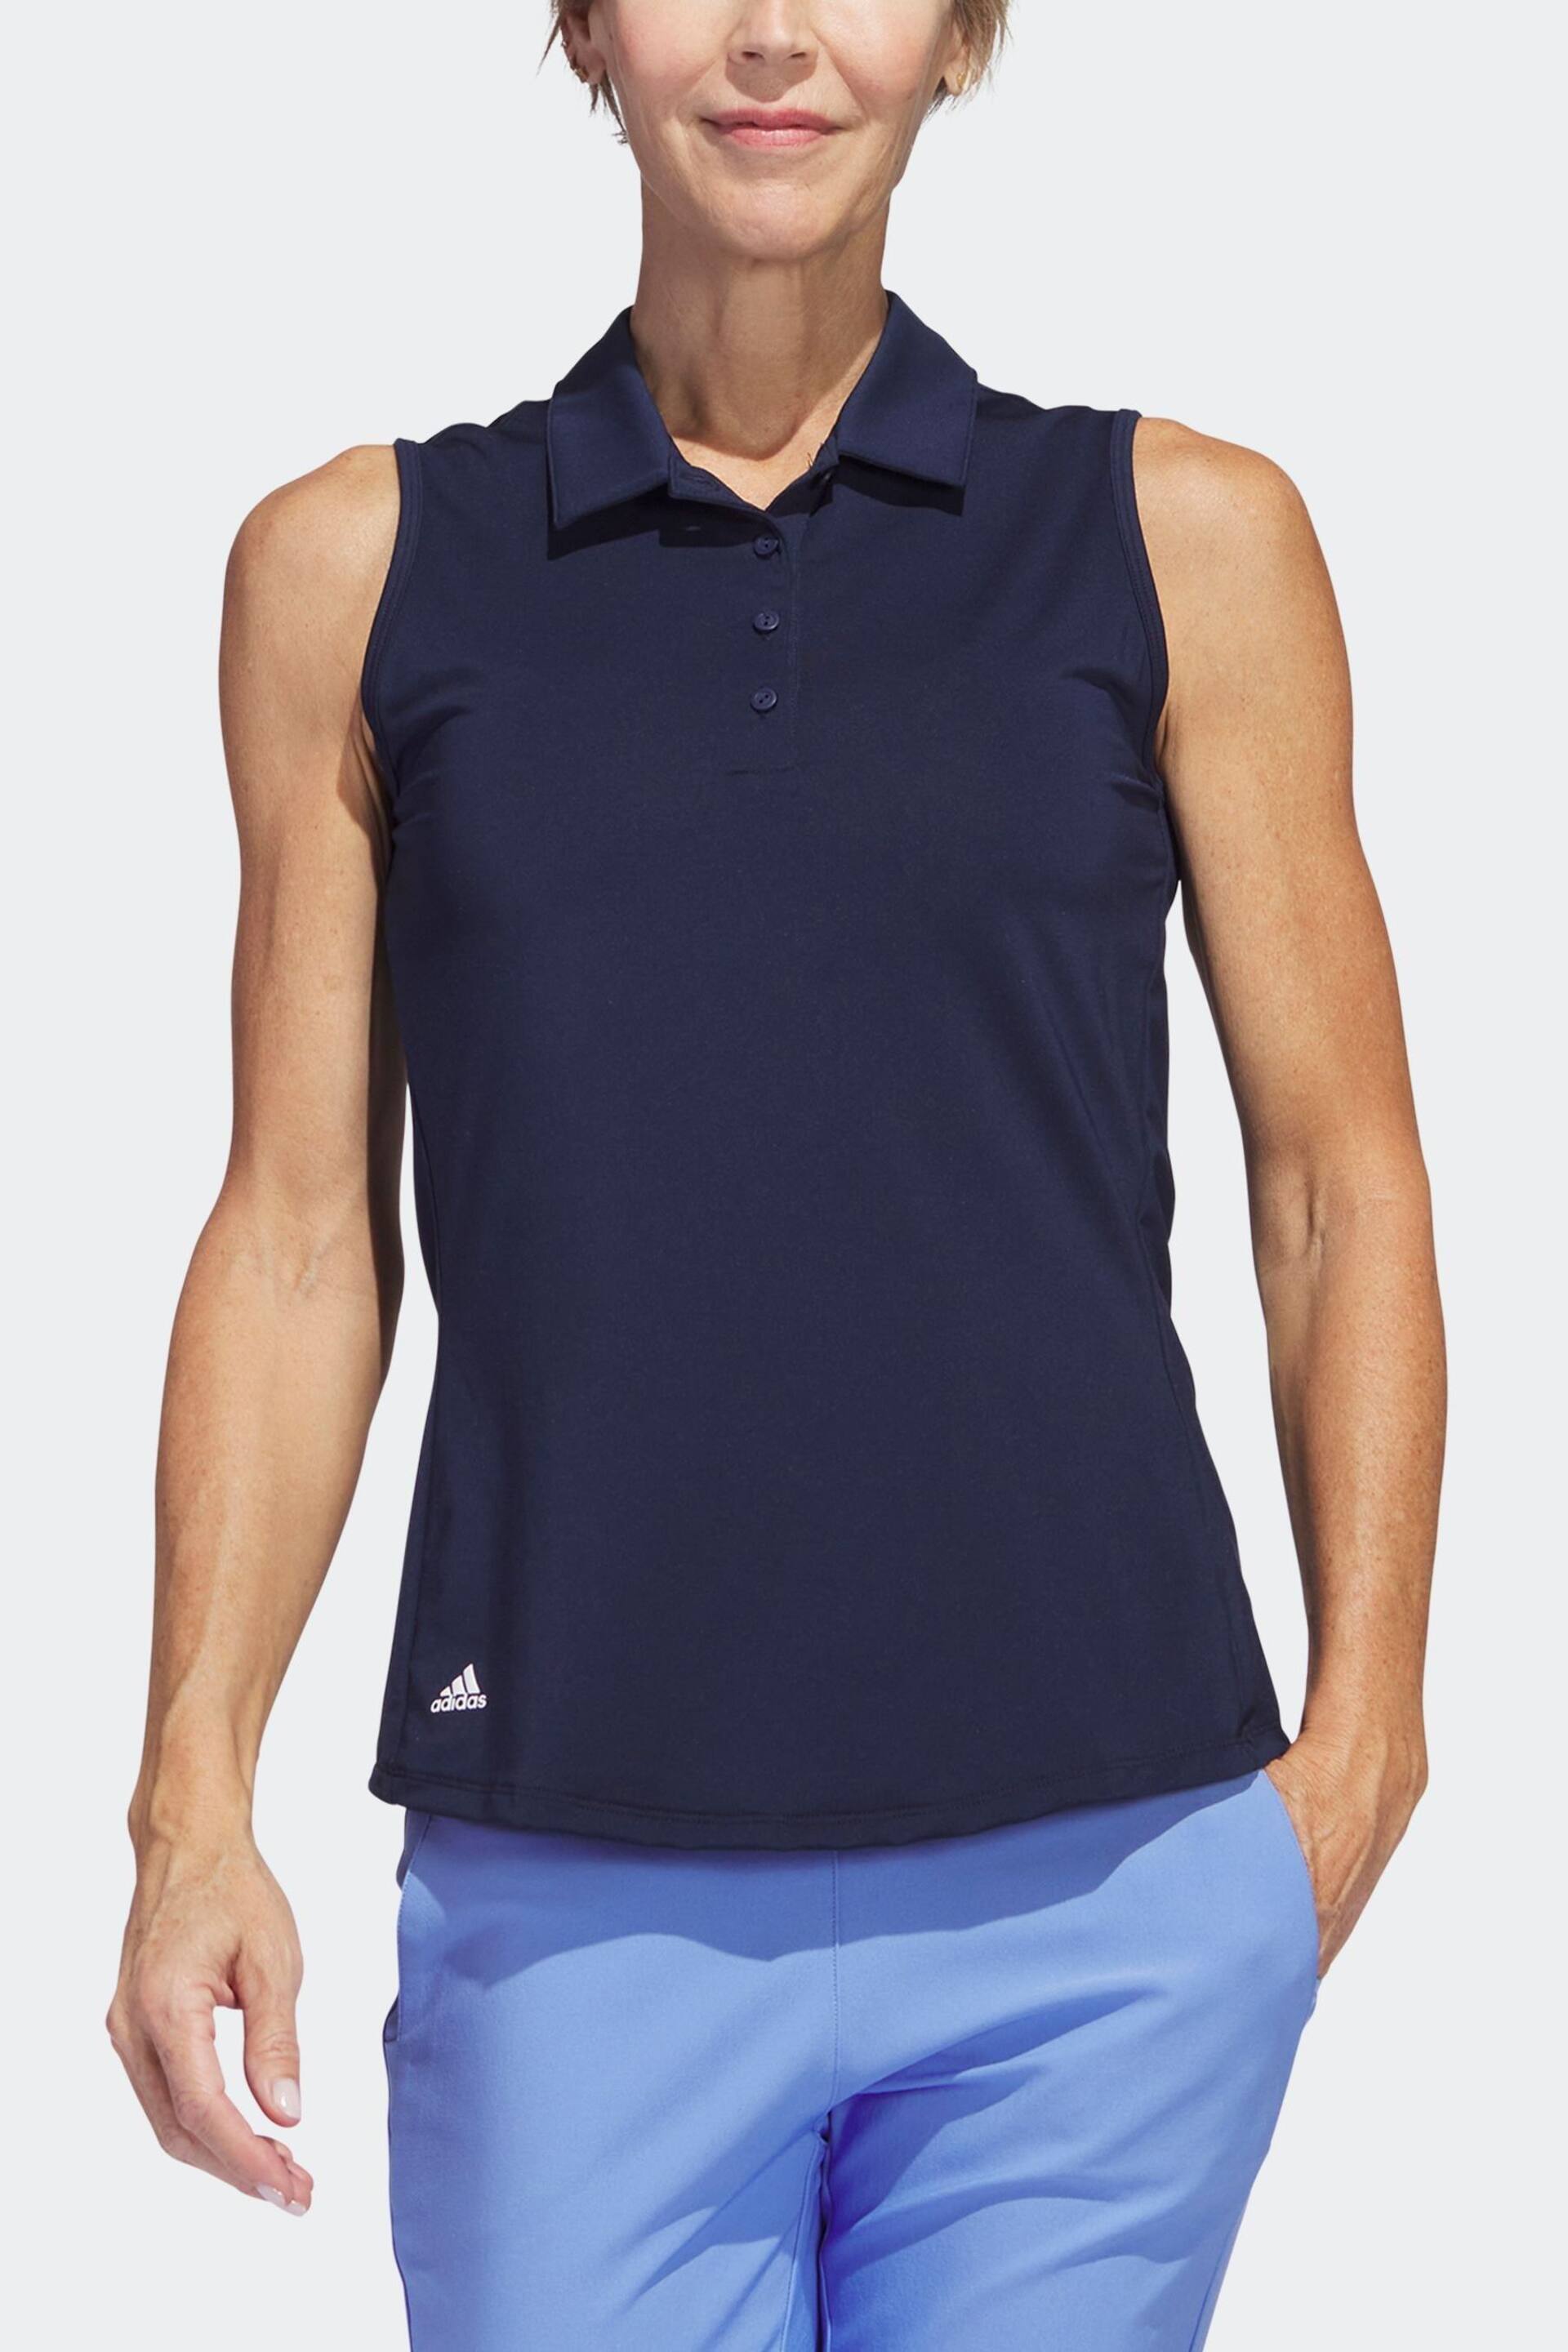 adidas Golf Ultimate 365 Solid Sleeveless Polo Shirt - Image 4 of 7